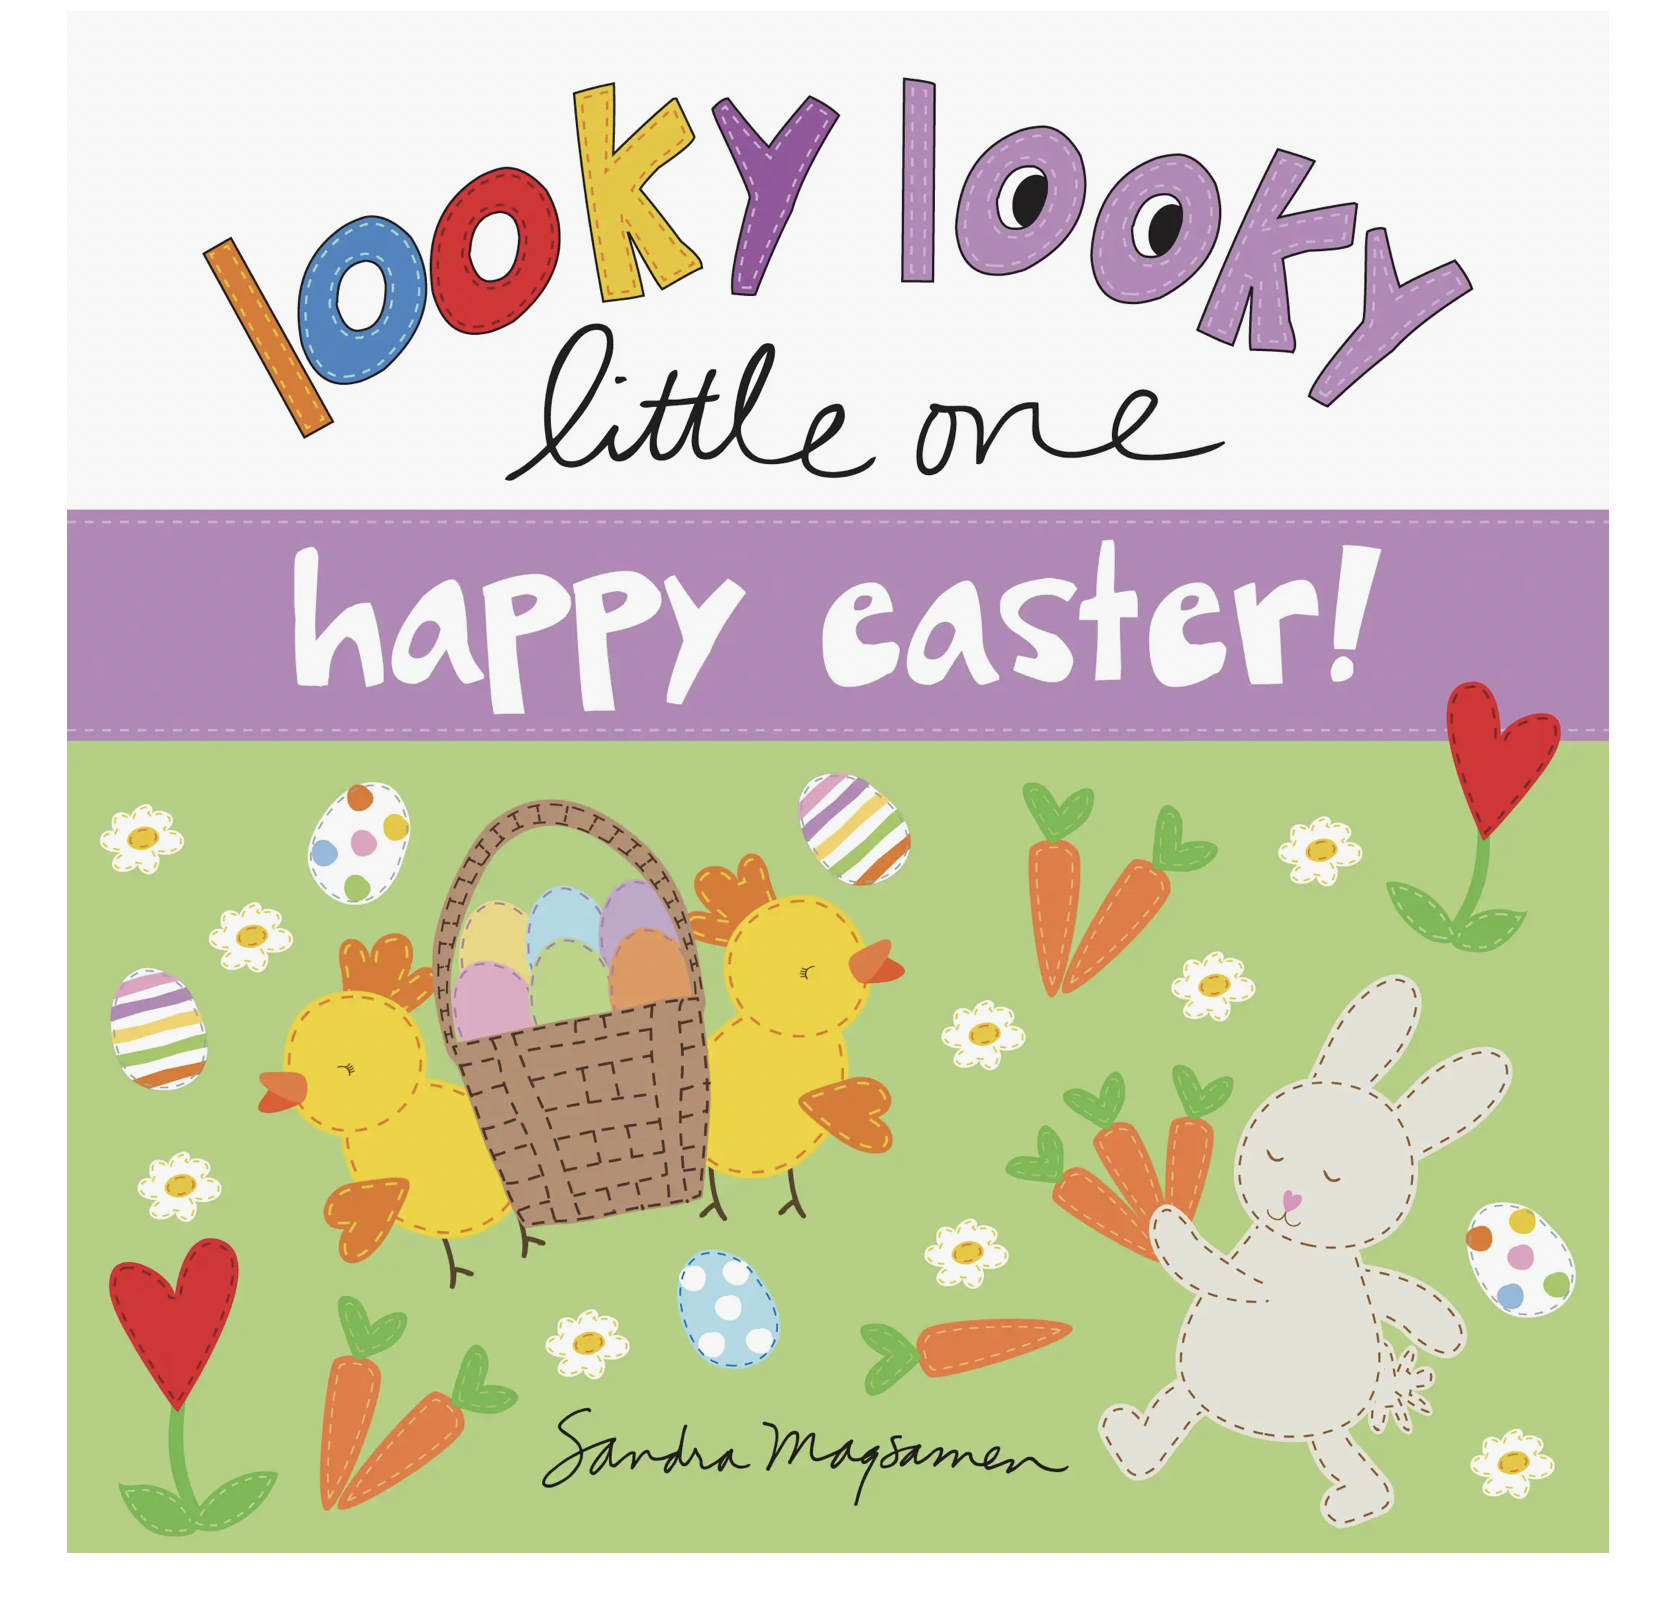 Looky Looky Little One- Happy Easter Book